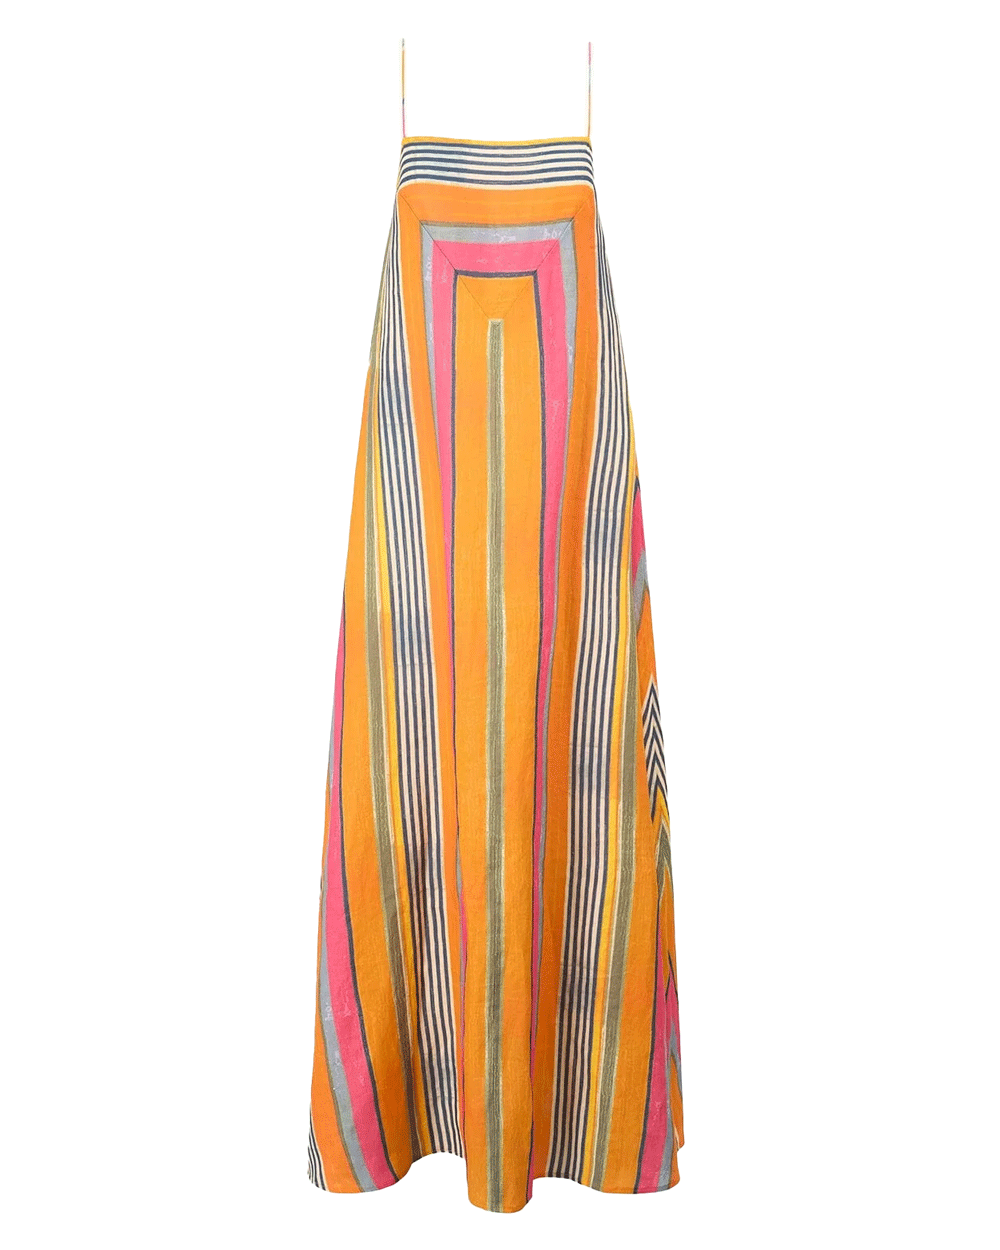 Multibayadere Stripe Laura Dress